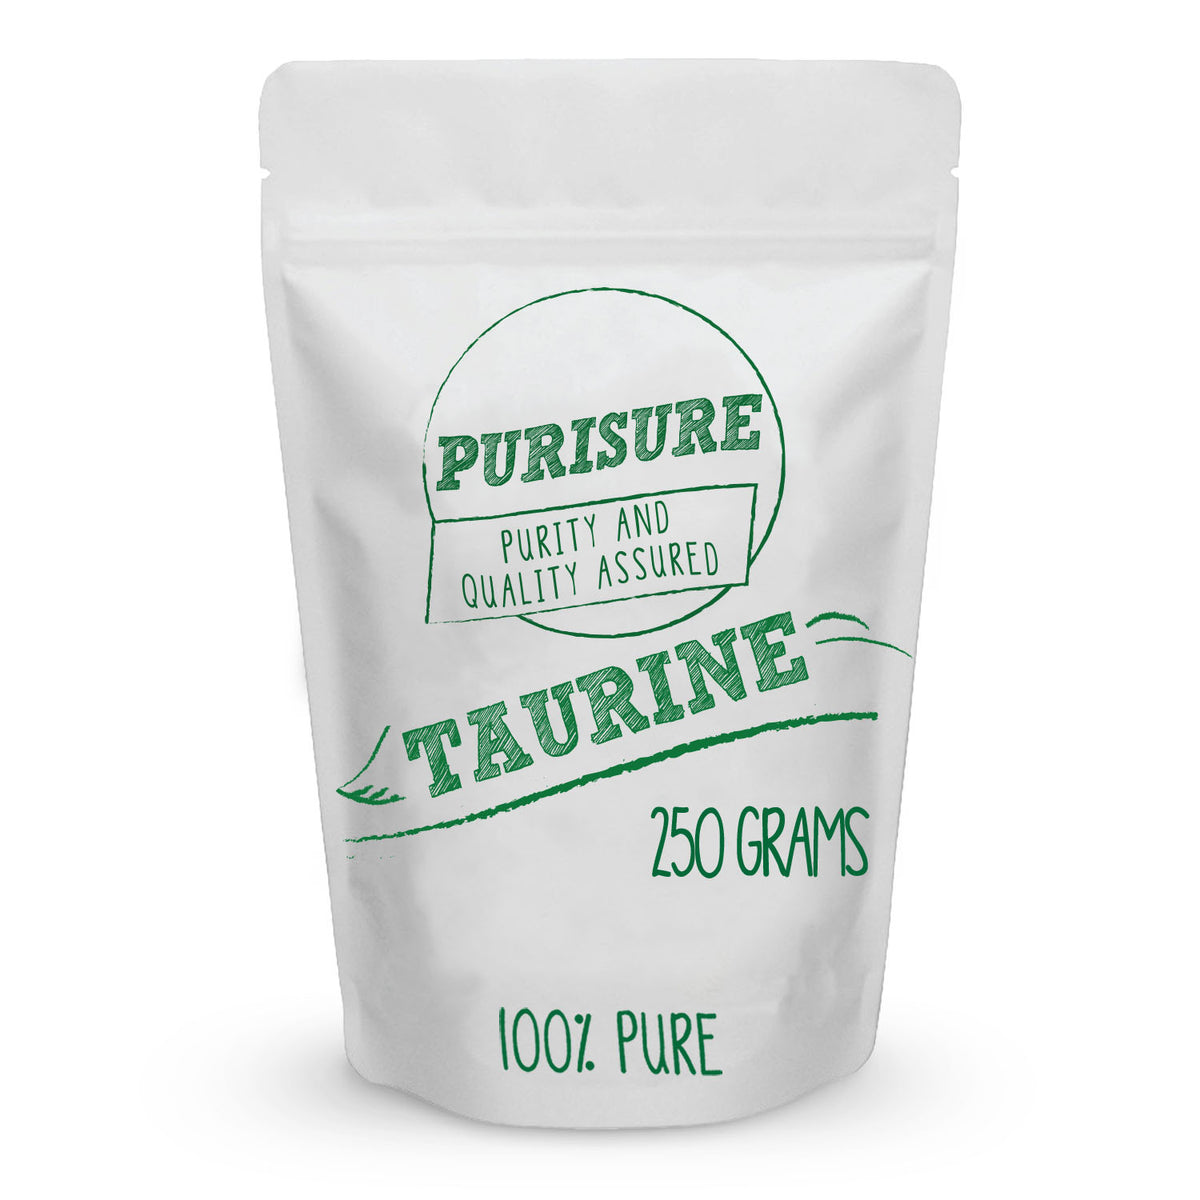 taurine powder amazon